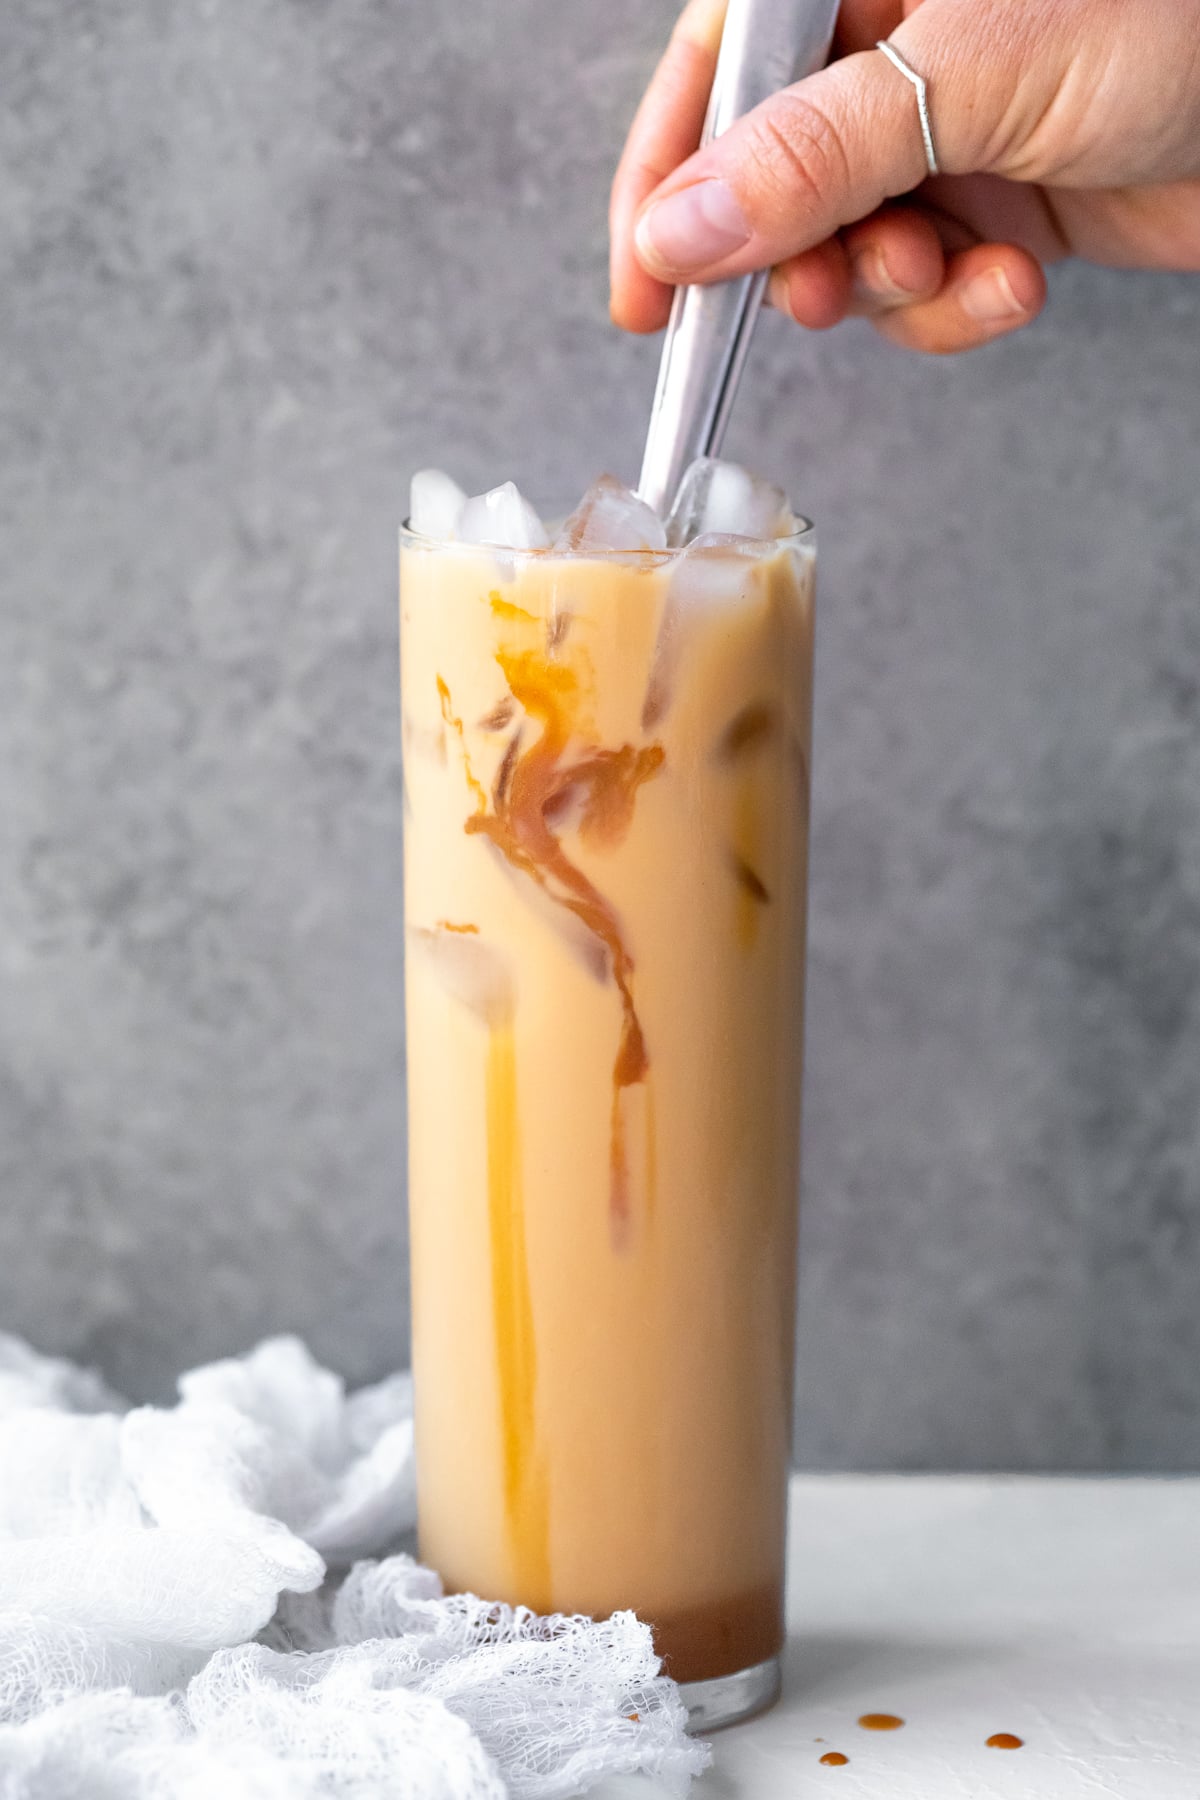 Carmel being stirred into an iced coffee against a grey backdrop.